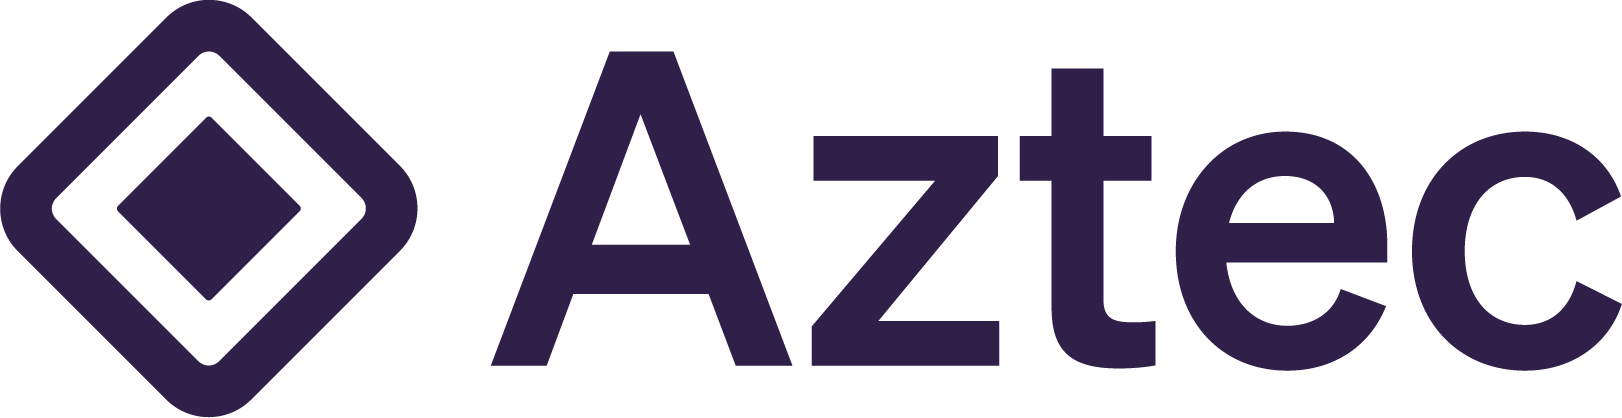 Aztec_logo